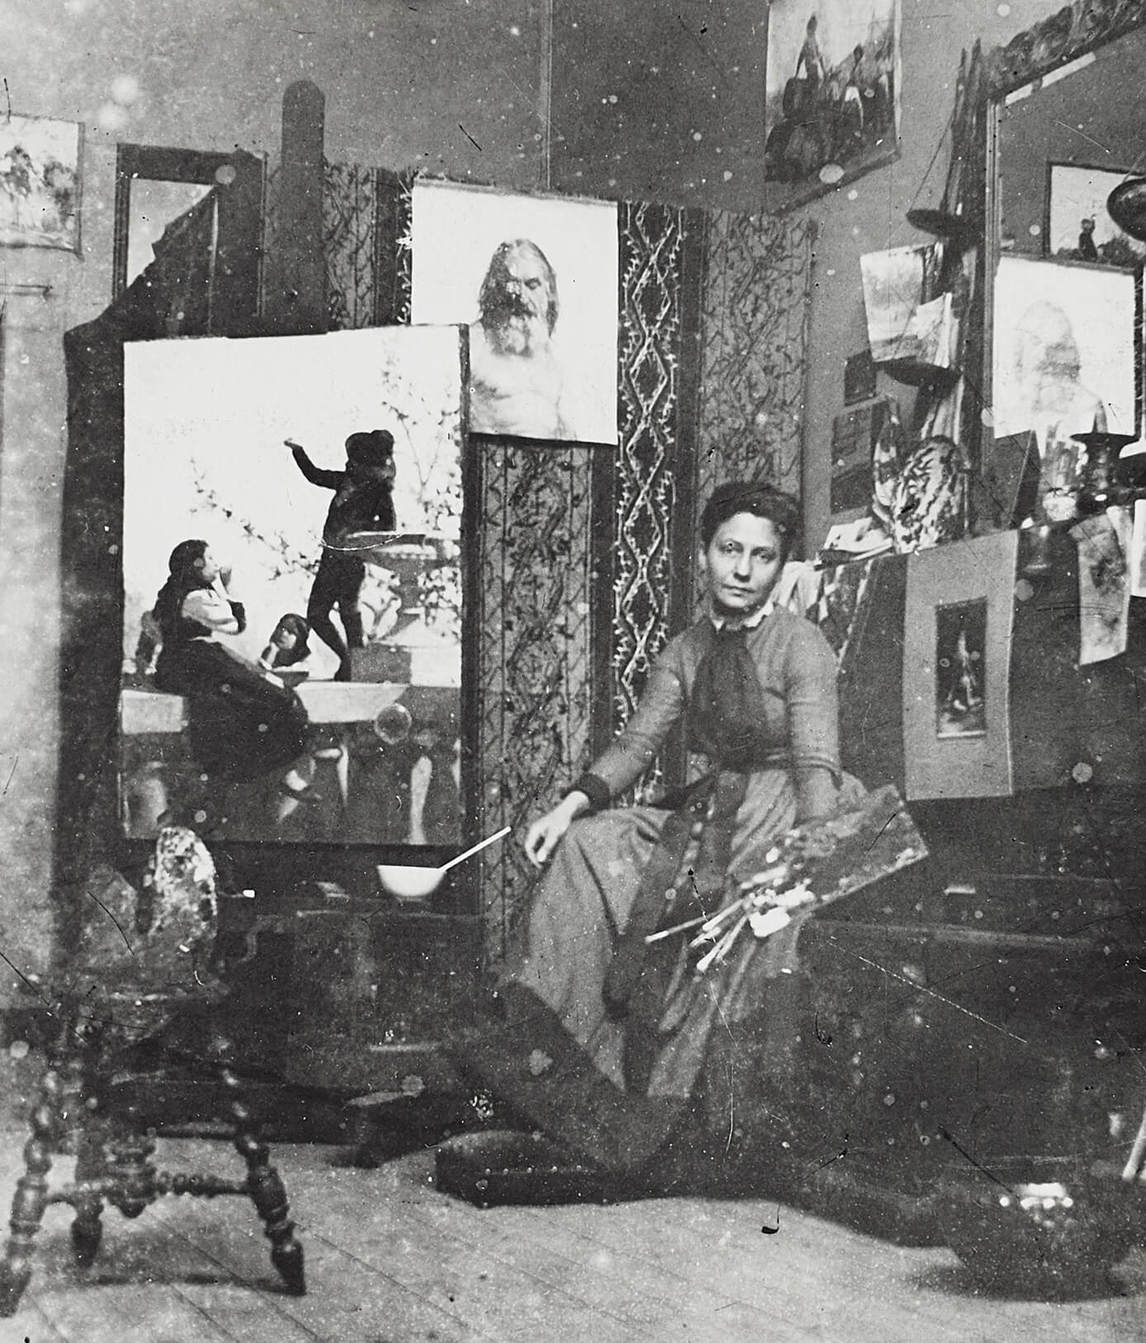 Mary Hiester Reid in her Paris Studio at 65 Boulevard Arago, 1888-89